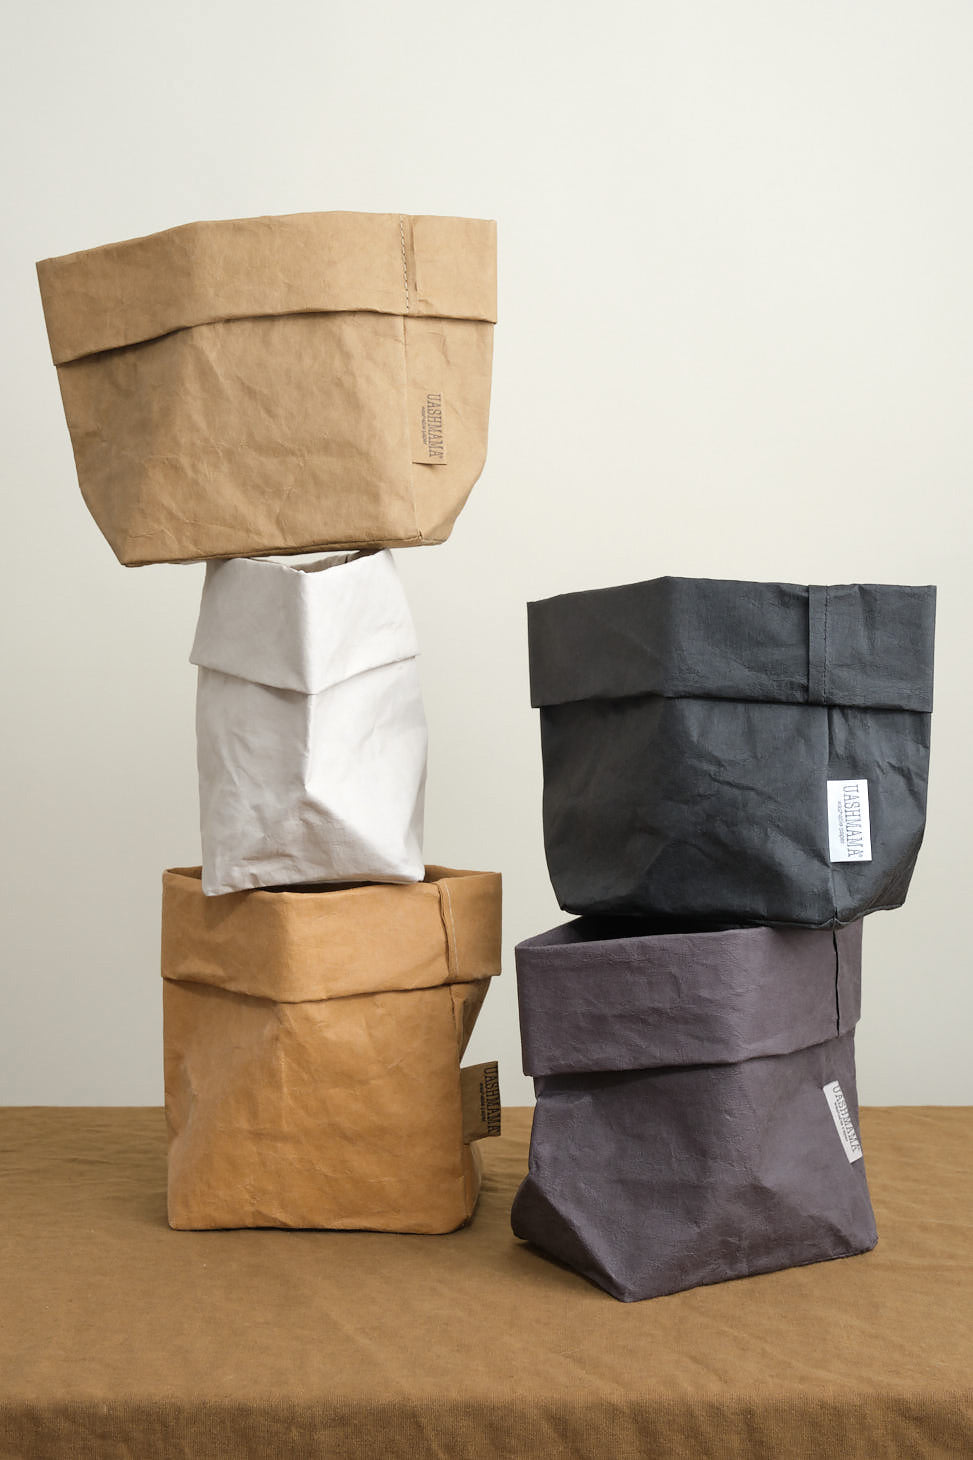 Medium Paper Bags stacked on Medium Paper Bag